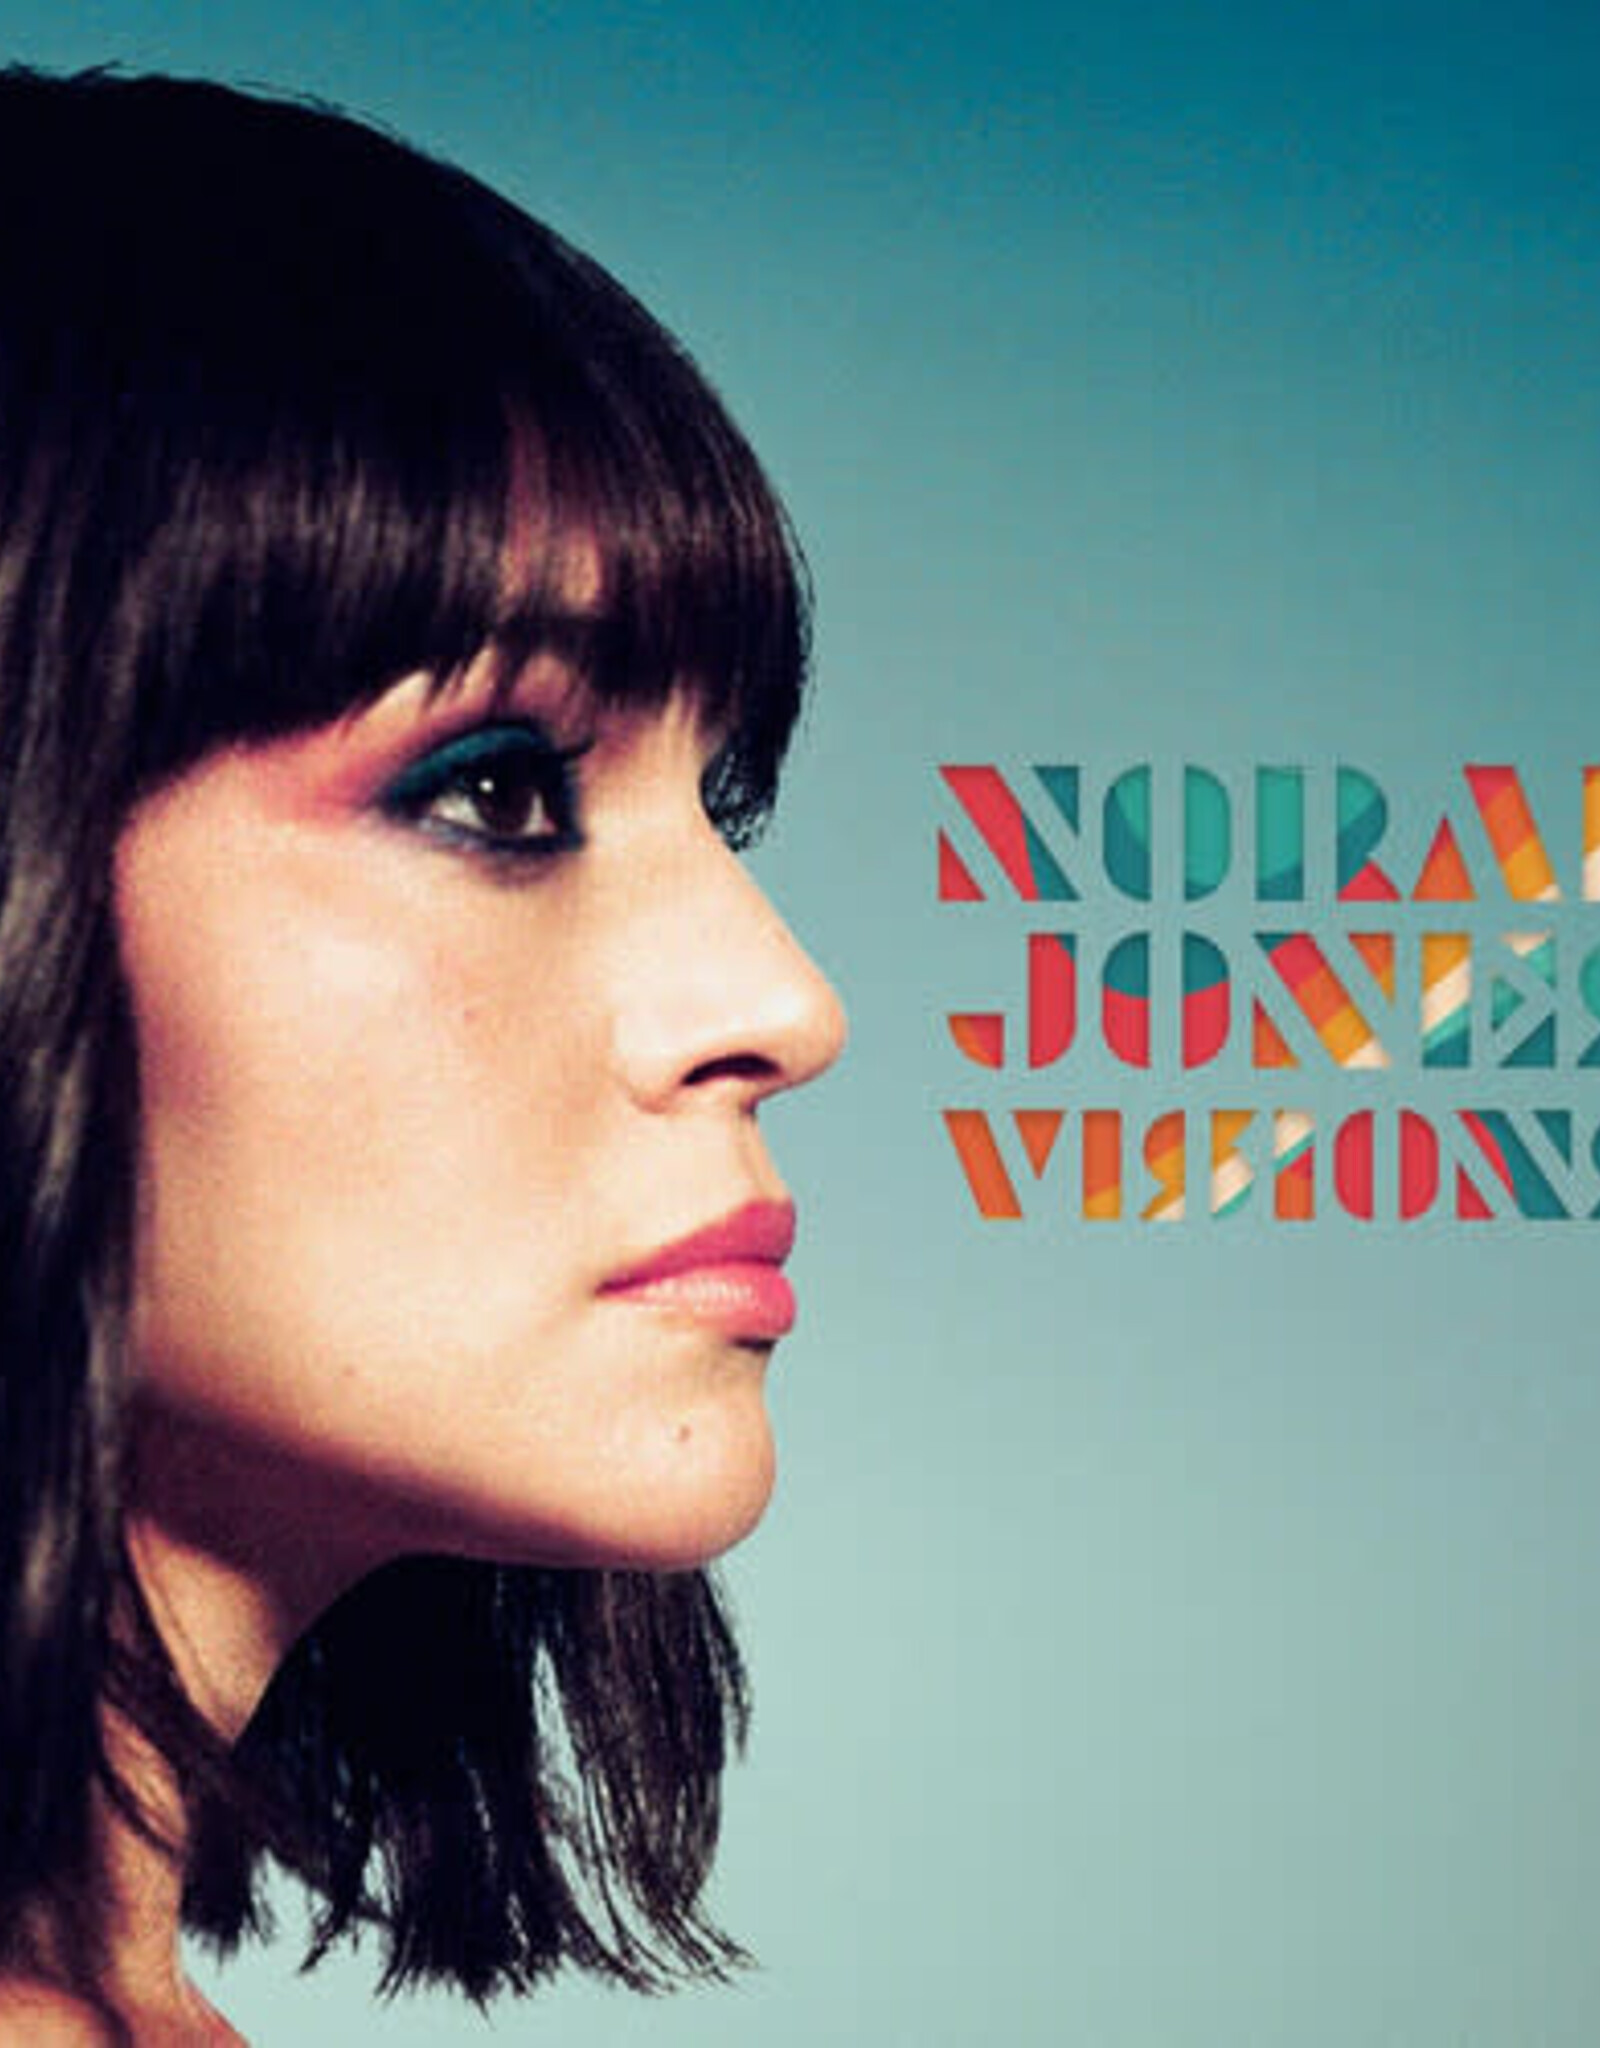 Norah Jones - Visions (Indie Exclusive, Orange Vinyl, Alternate Cover)